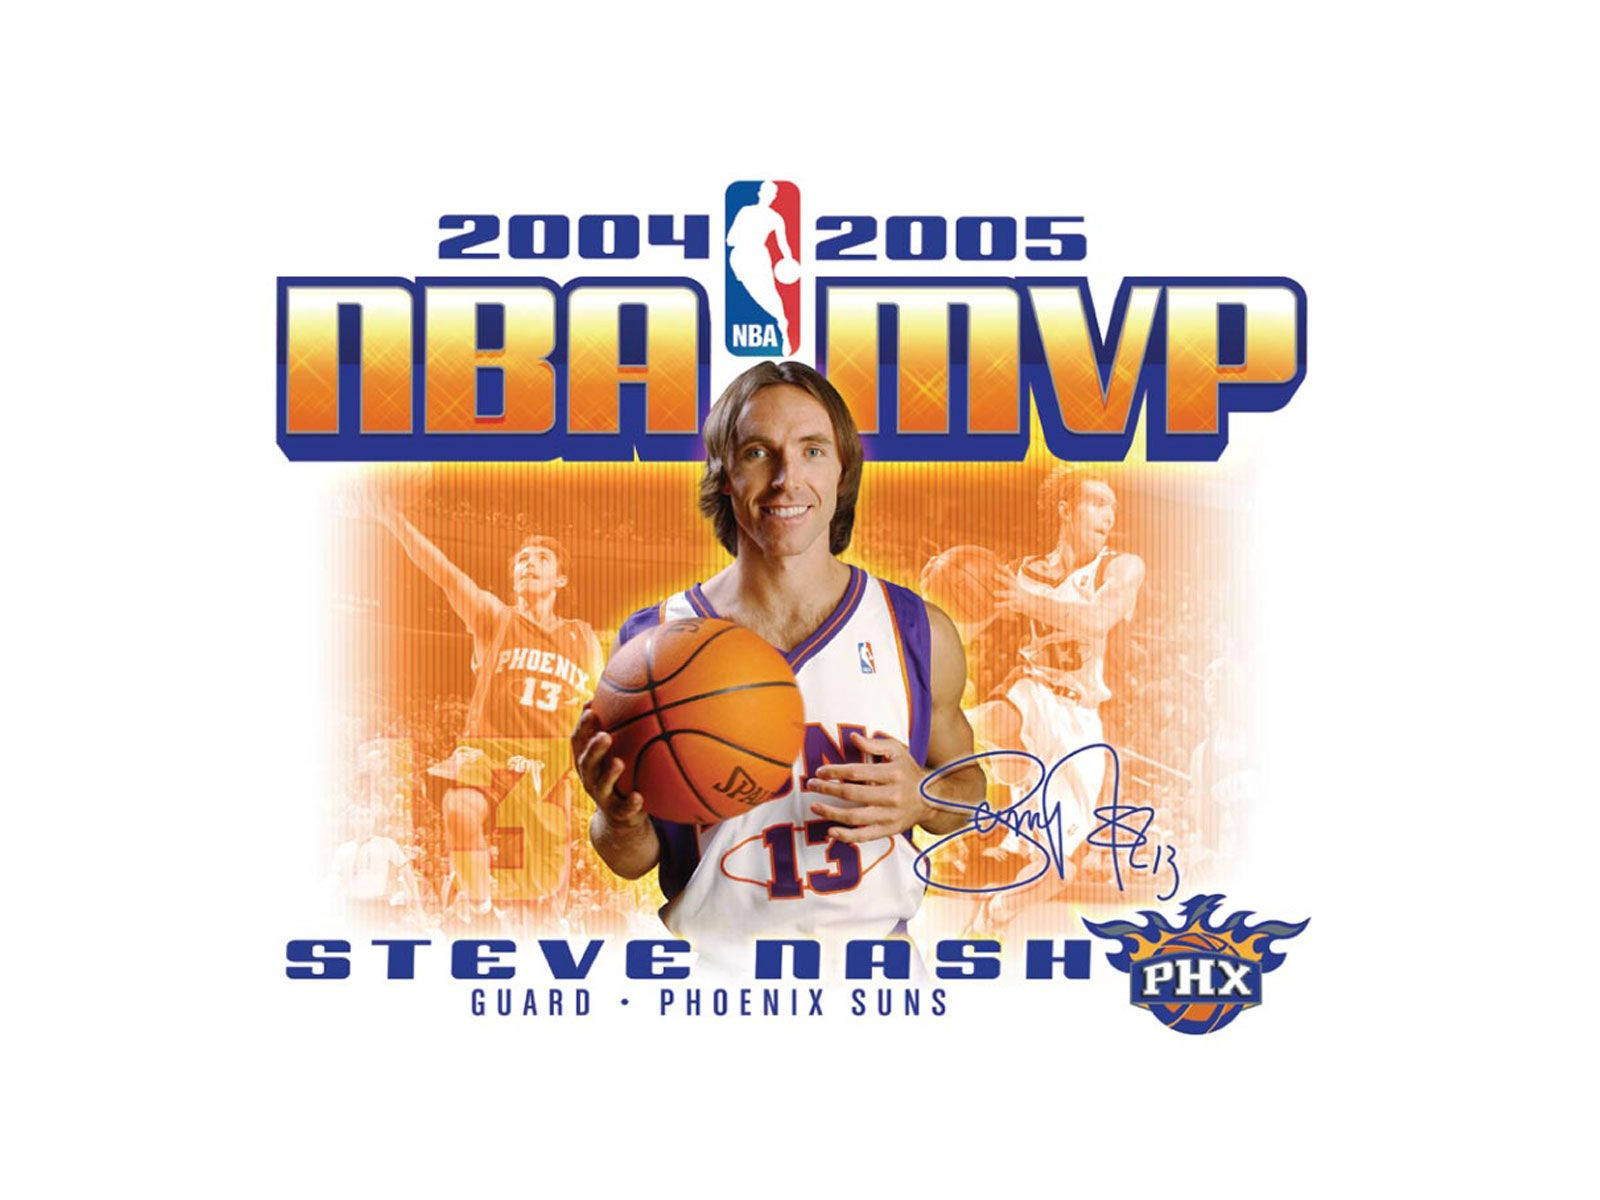 Steve Nash Nba 2004 2005 Mvp